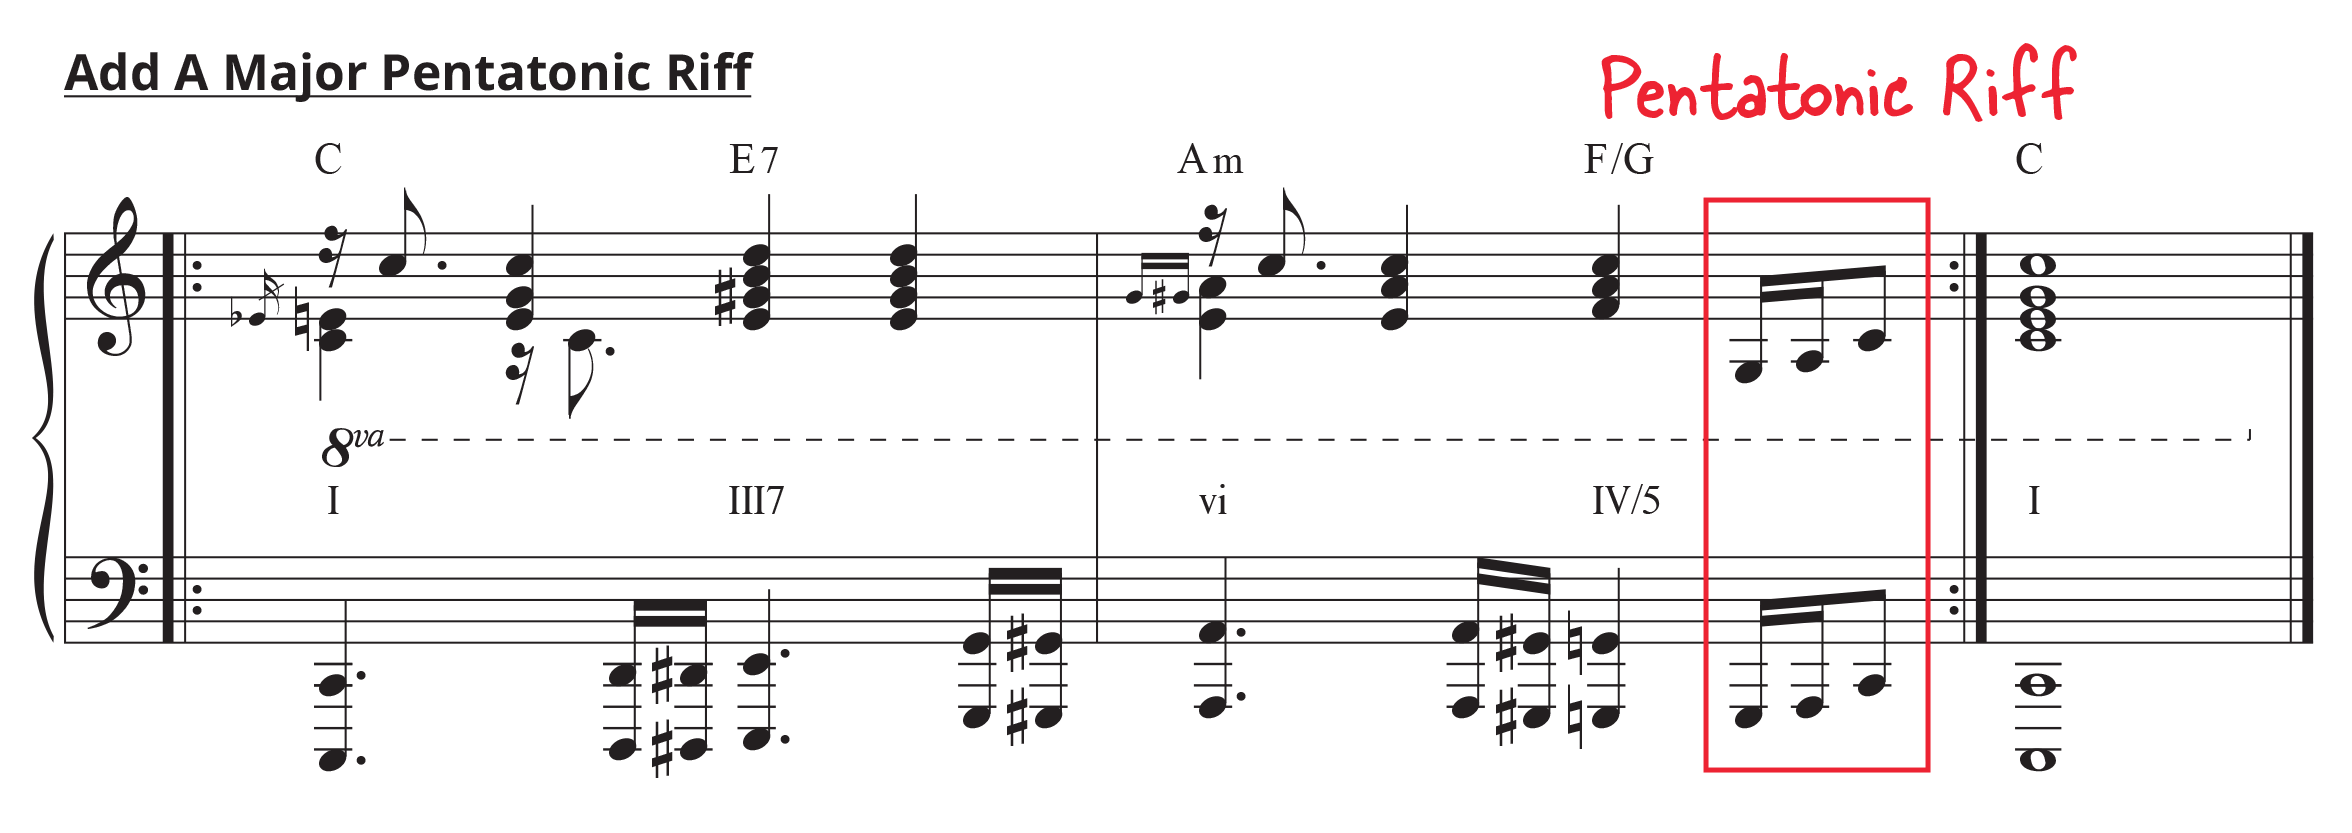 Standard notation of gospel progression with pentatonic riff